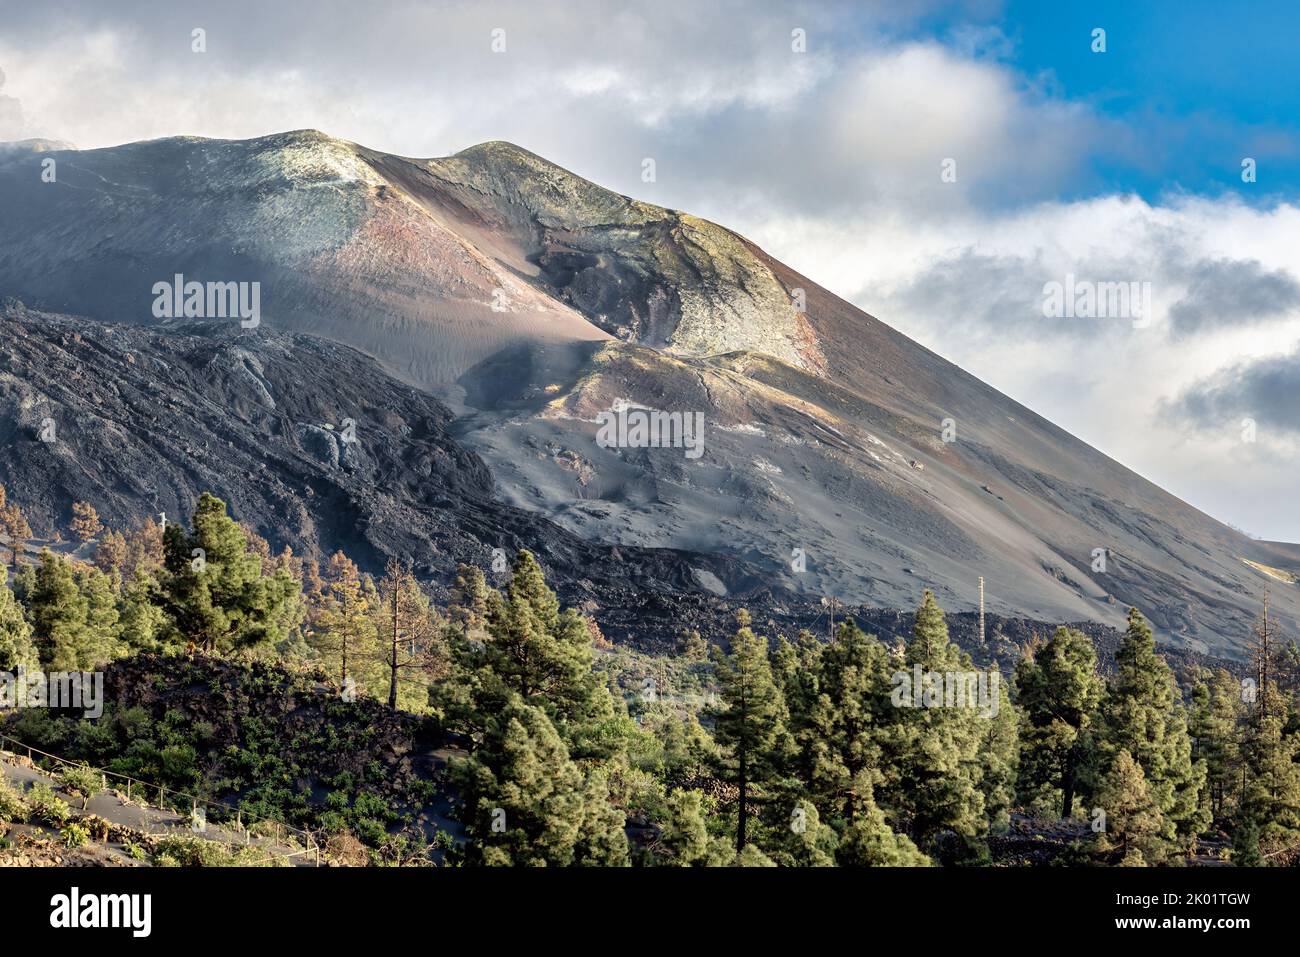 Volcano Cumbre Vieja La Palma Island,a couple of months after the 2021 eruption Stock Photo